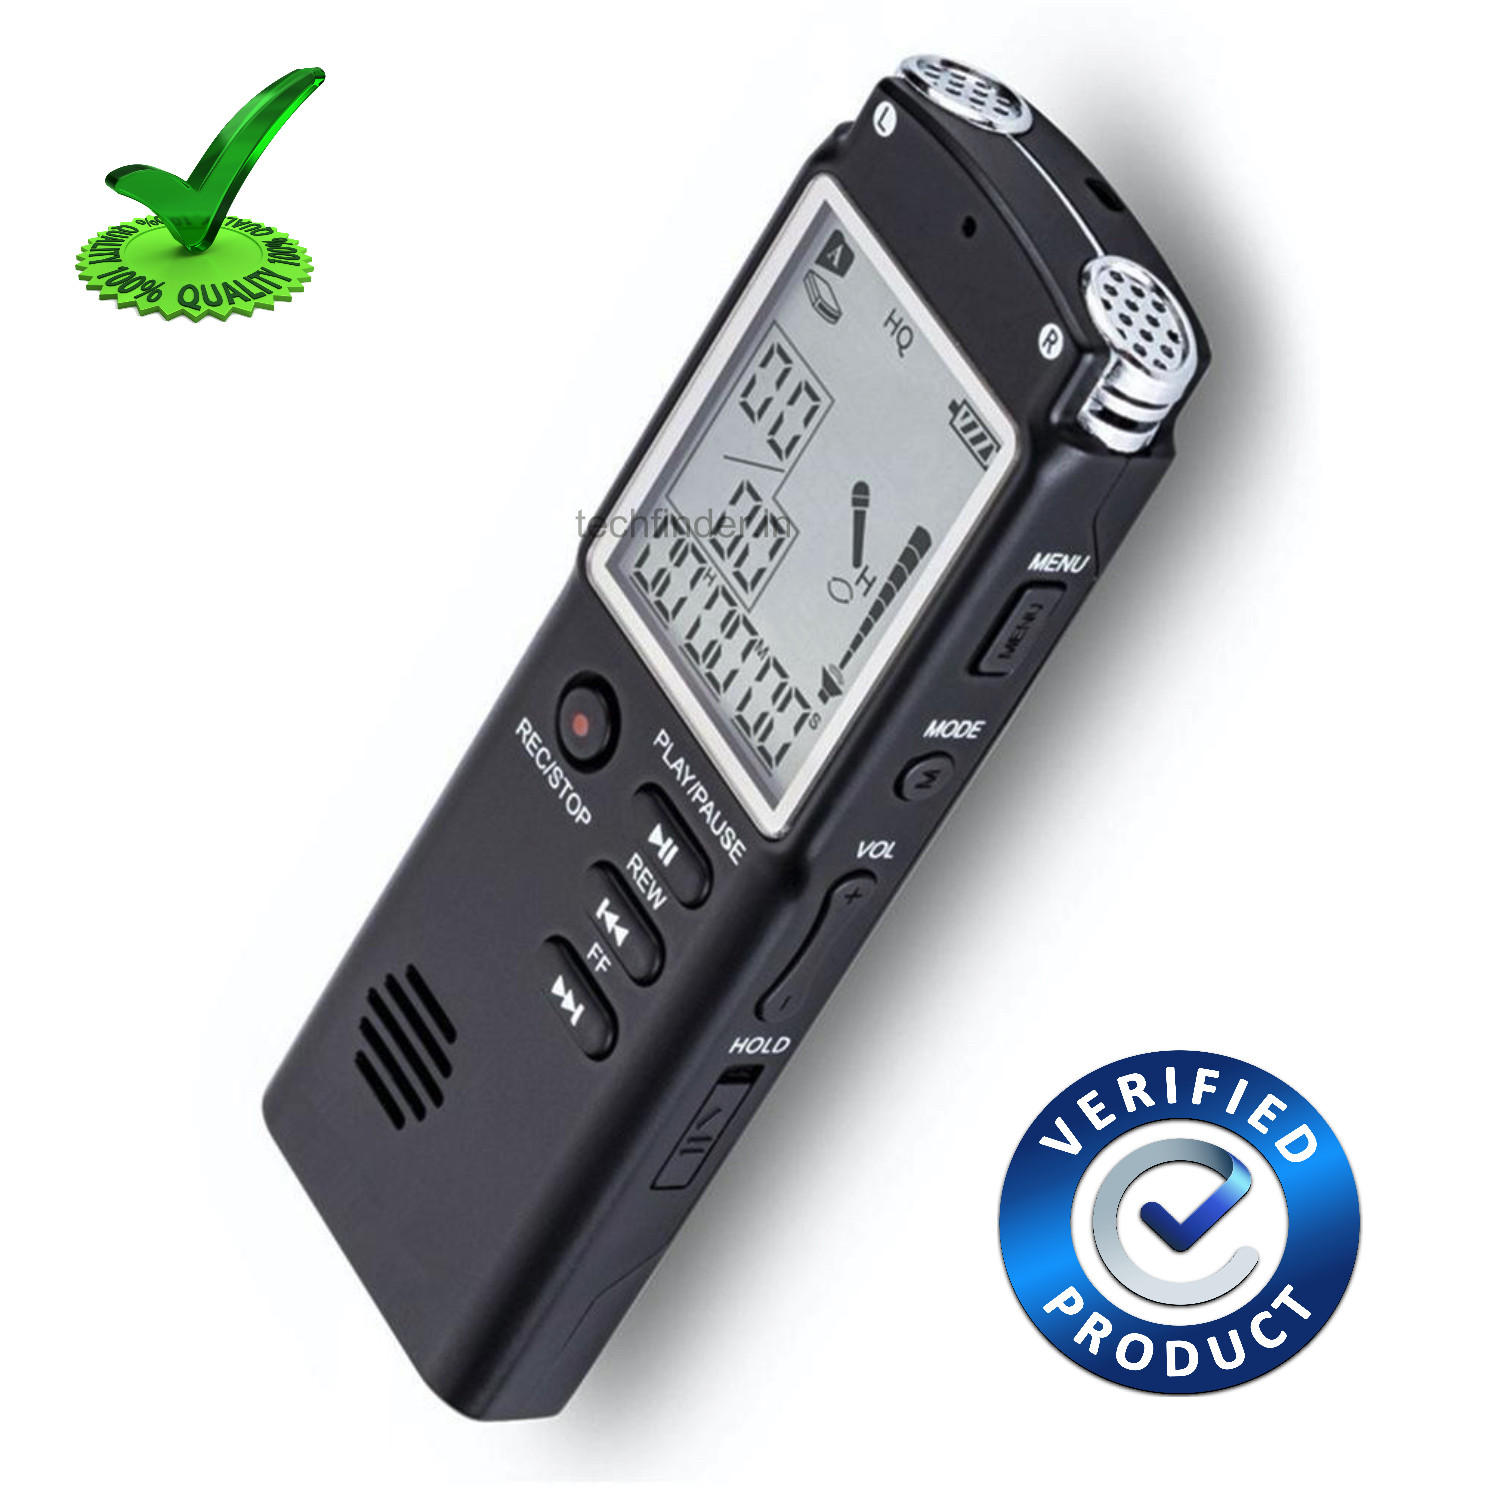 Digital 8GB Digital Audio Voice Recorder